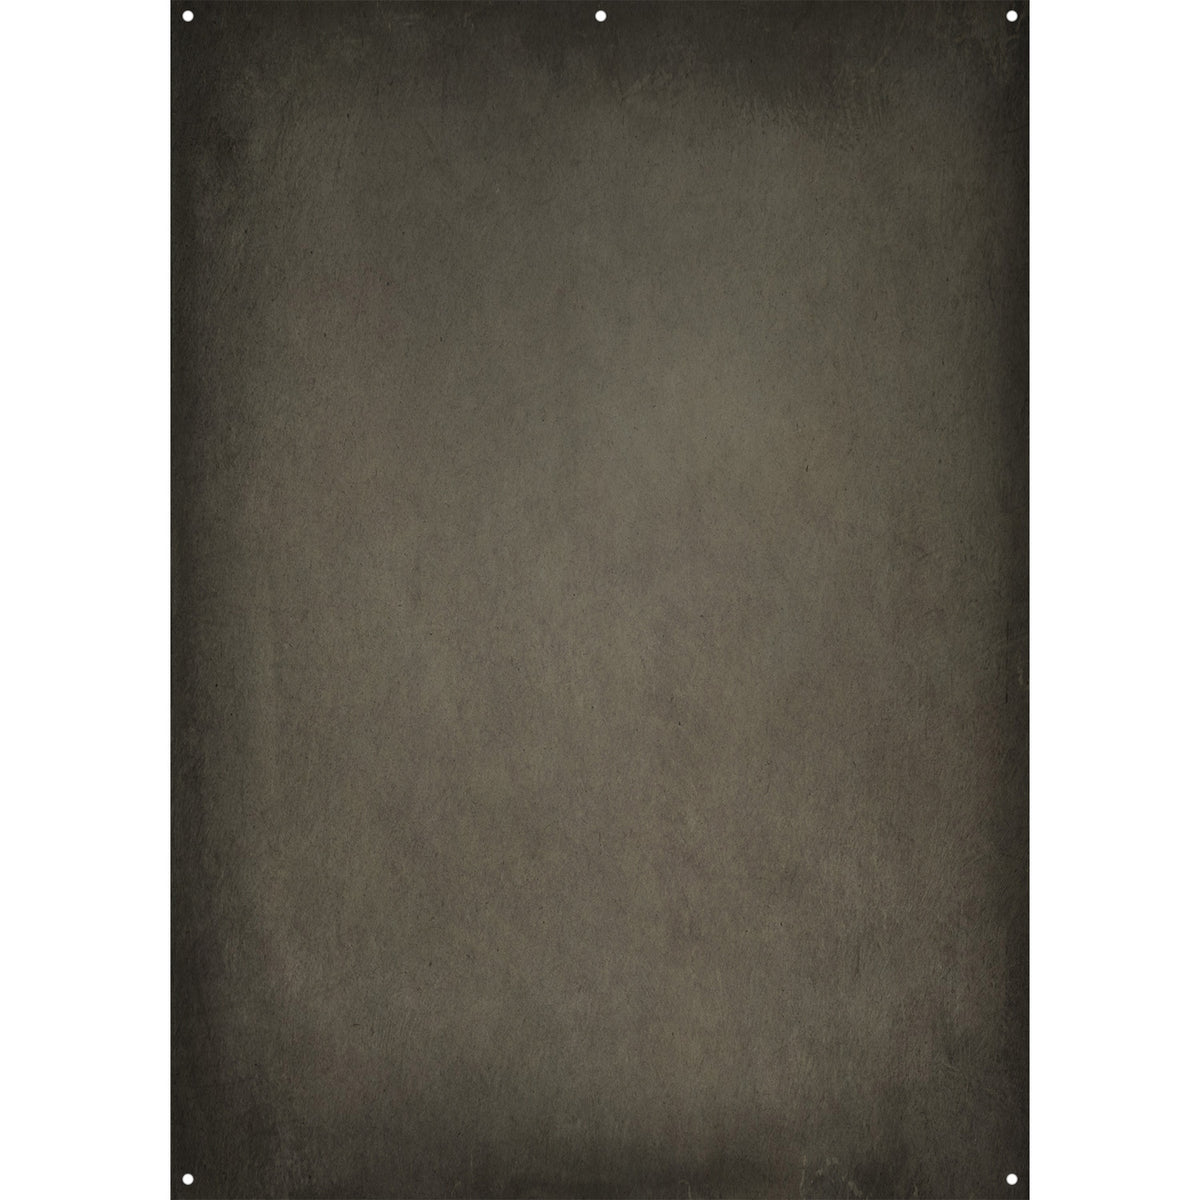 X-Drop Canvas Backdrop - Sandstone by Joel Grimes (5' x 7')